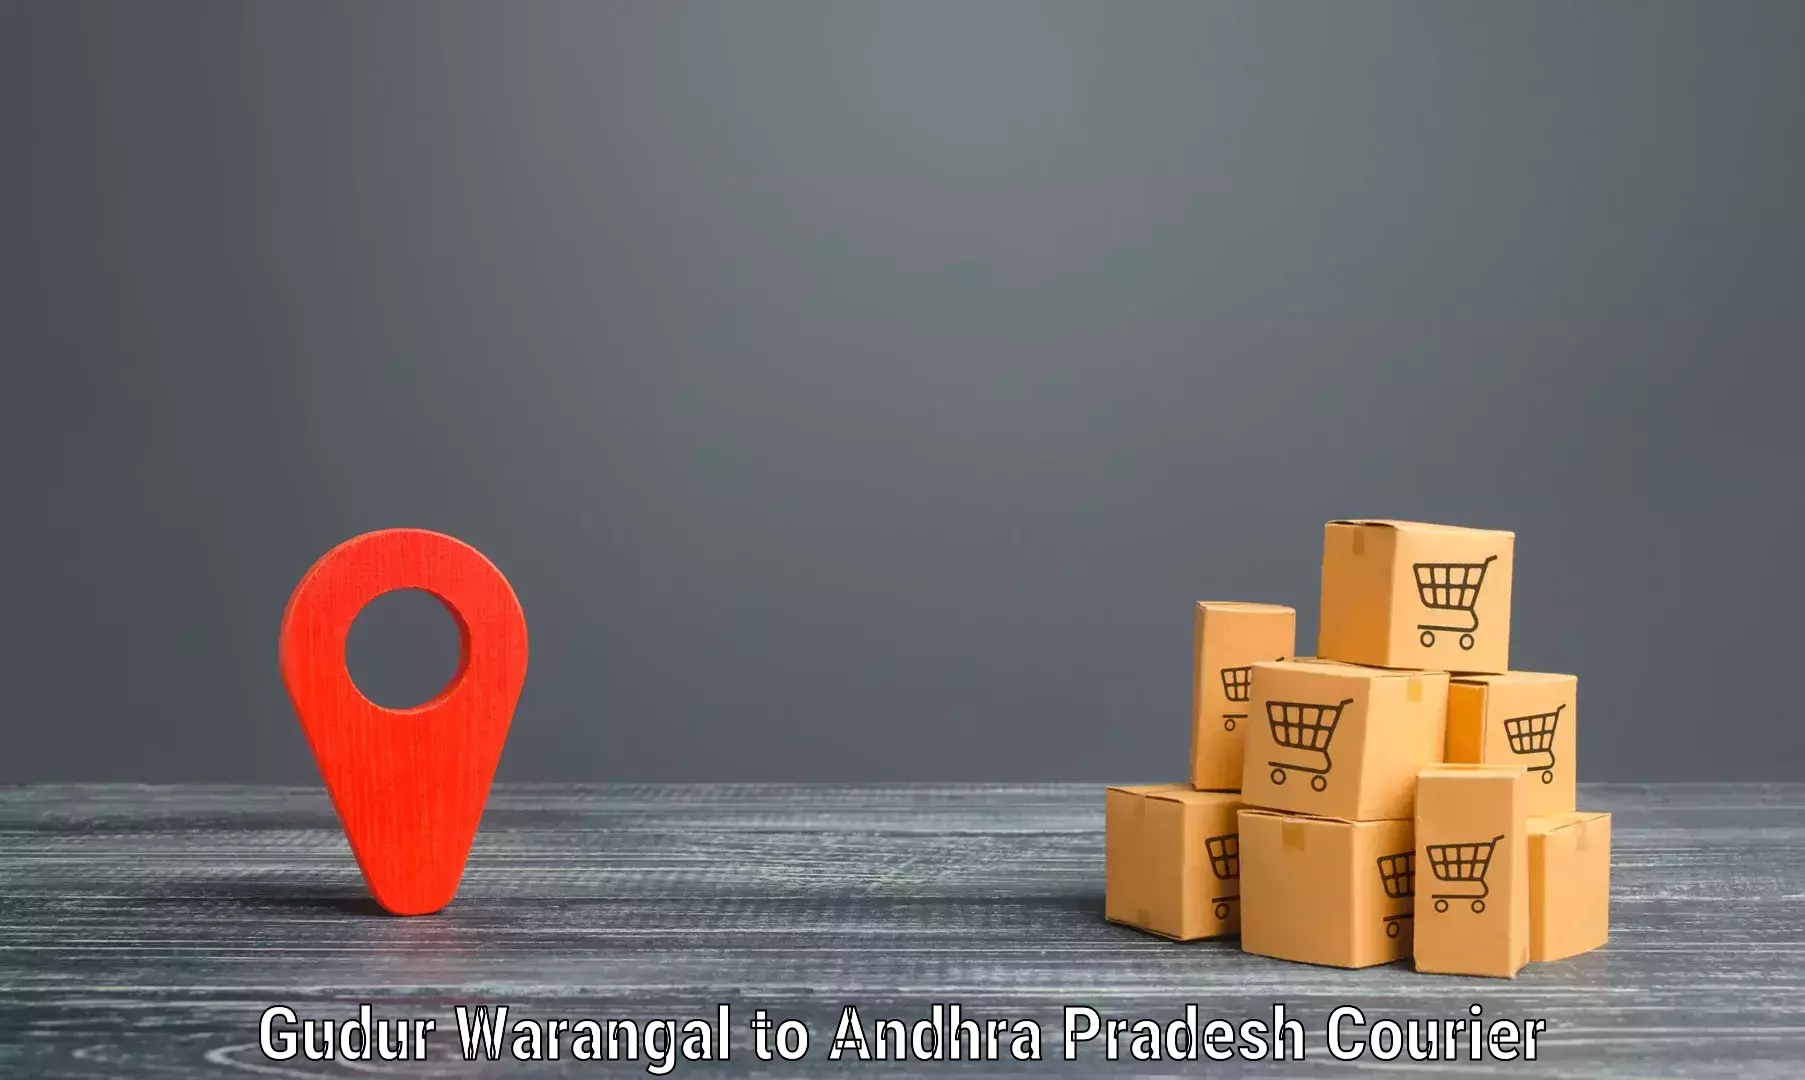 Courier service innovation Gudur Warangal to Gajapathinagaram